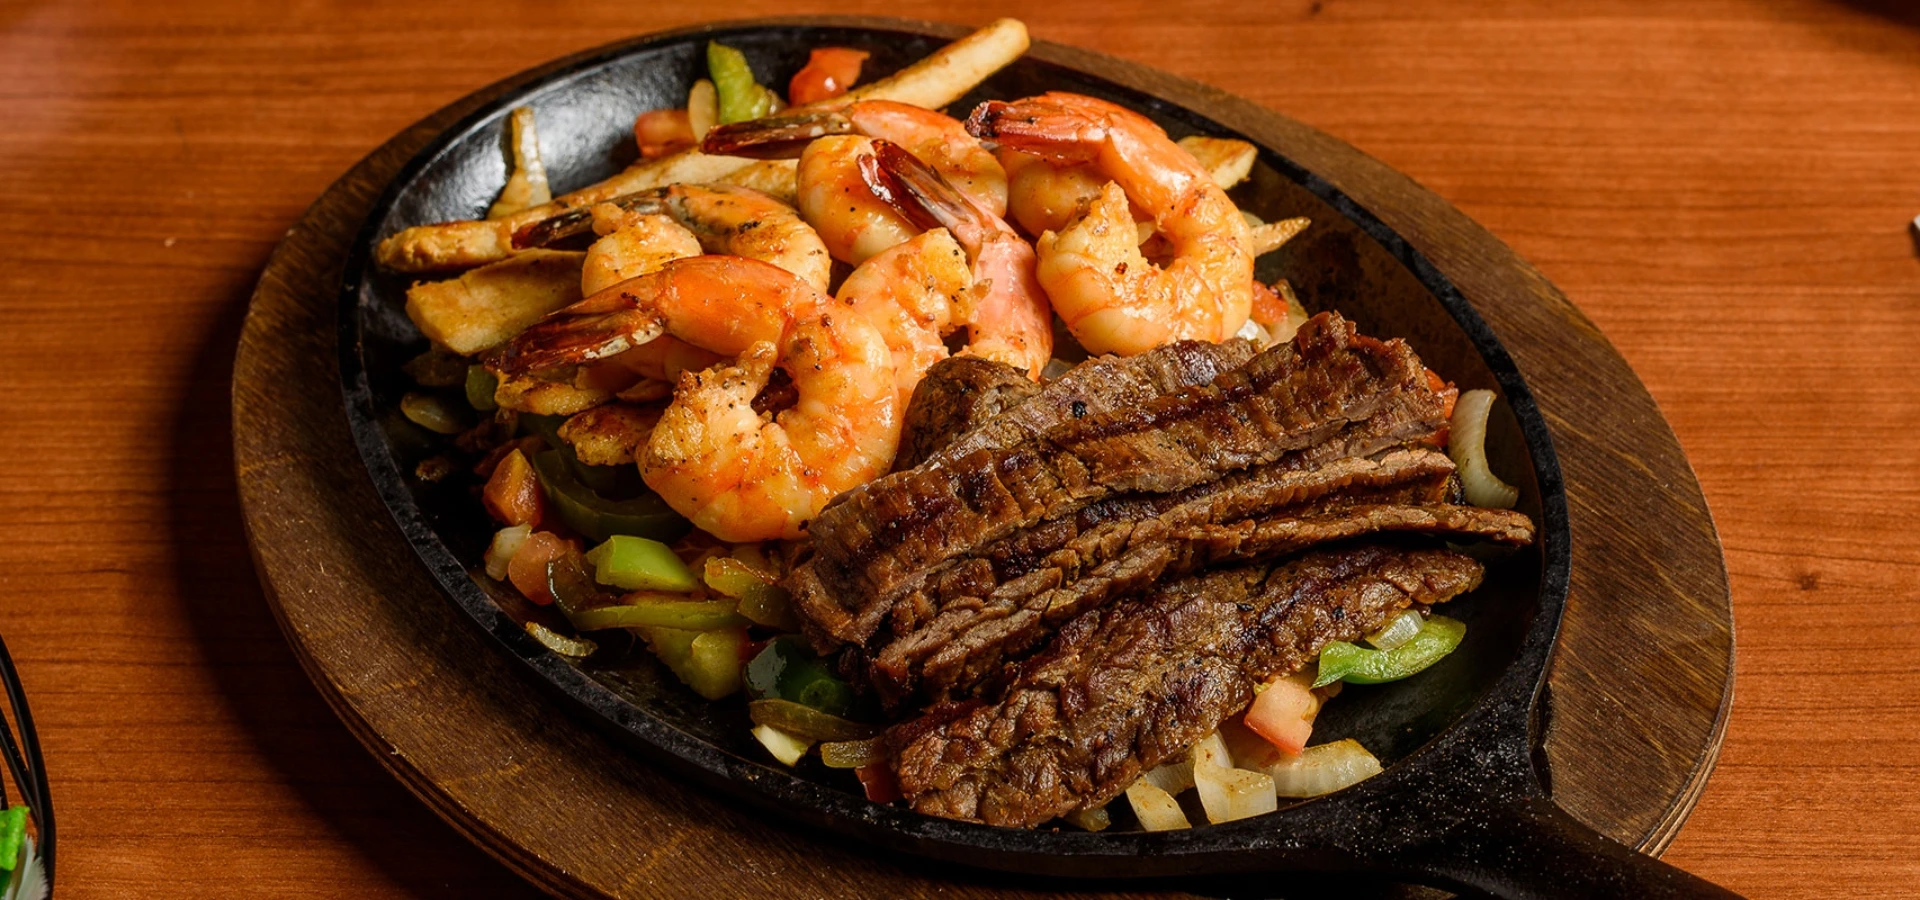 shrimp and steak fajitas